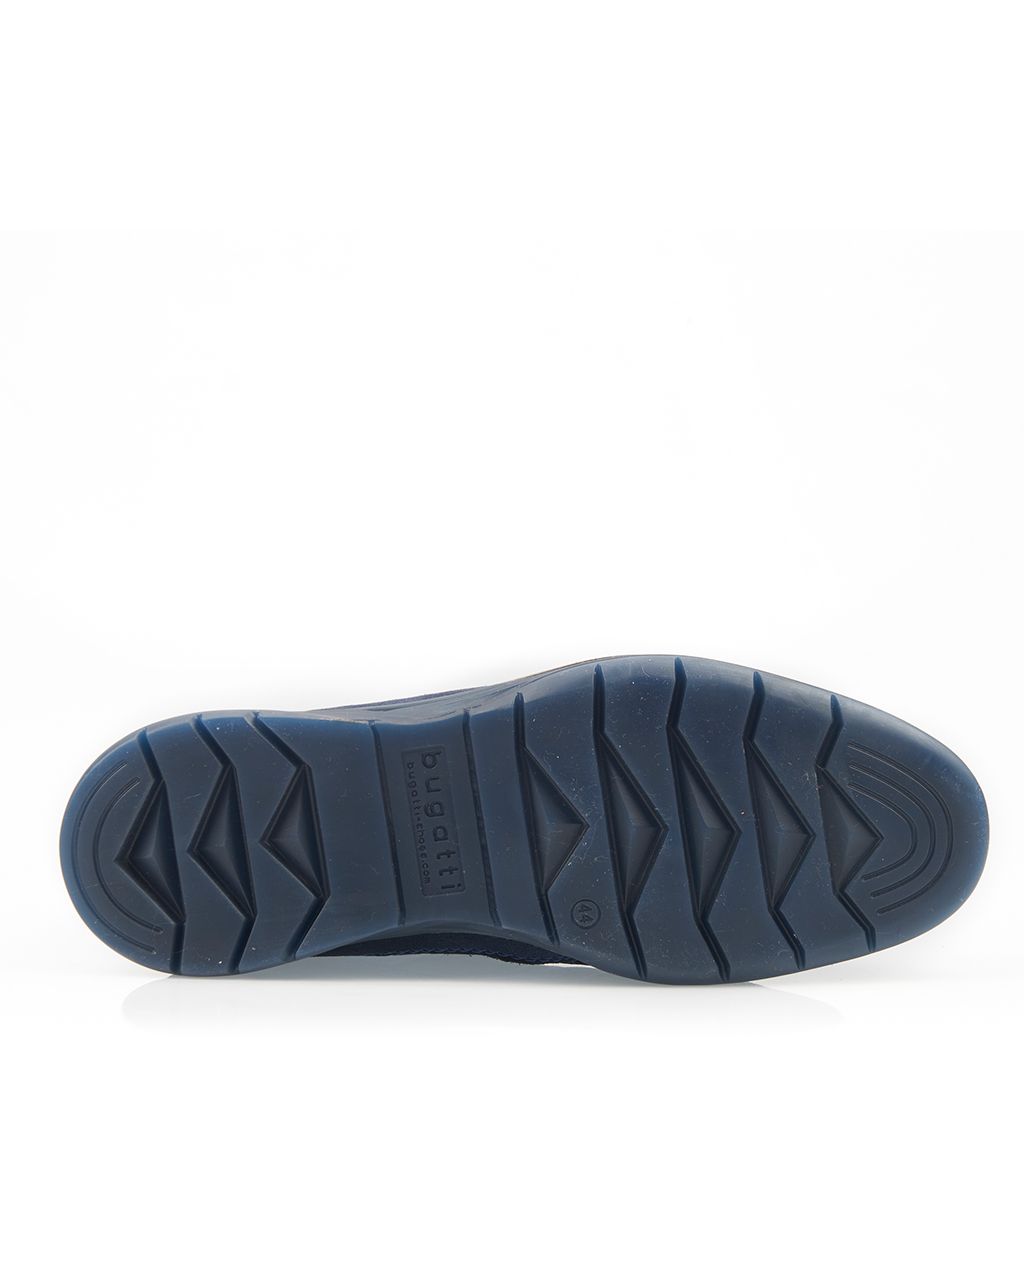 Bugatti Sandhan Comfort Casual schoenen Donker blauw 076877-001-41